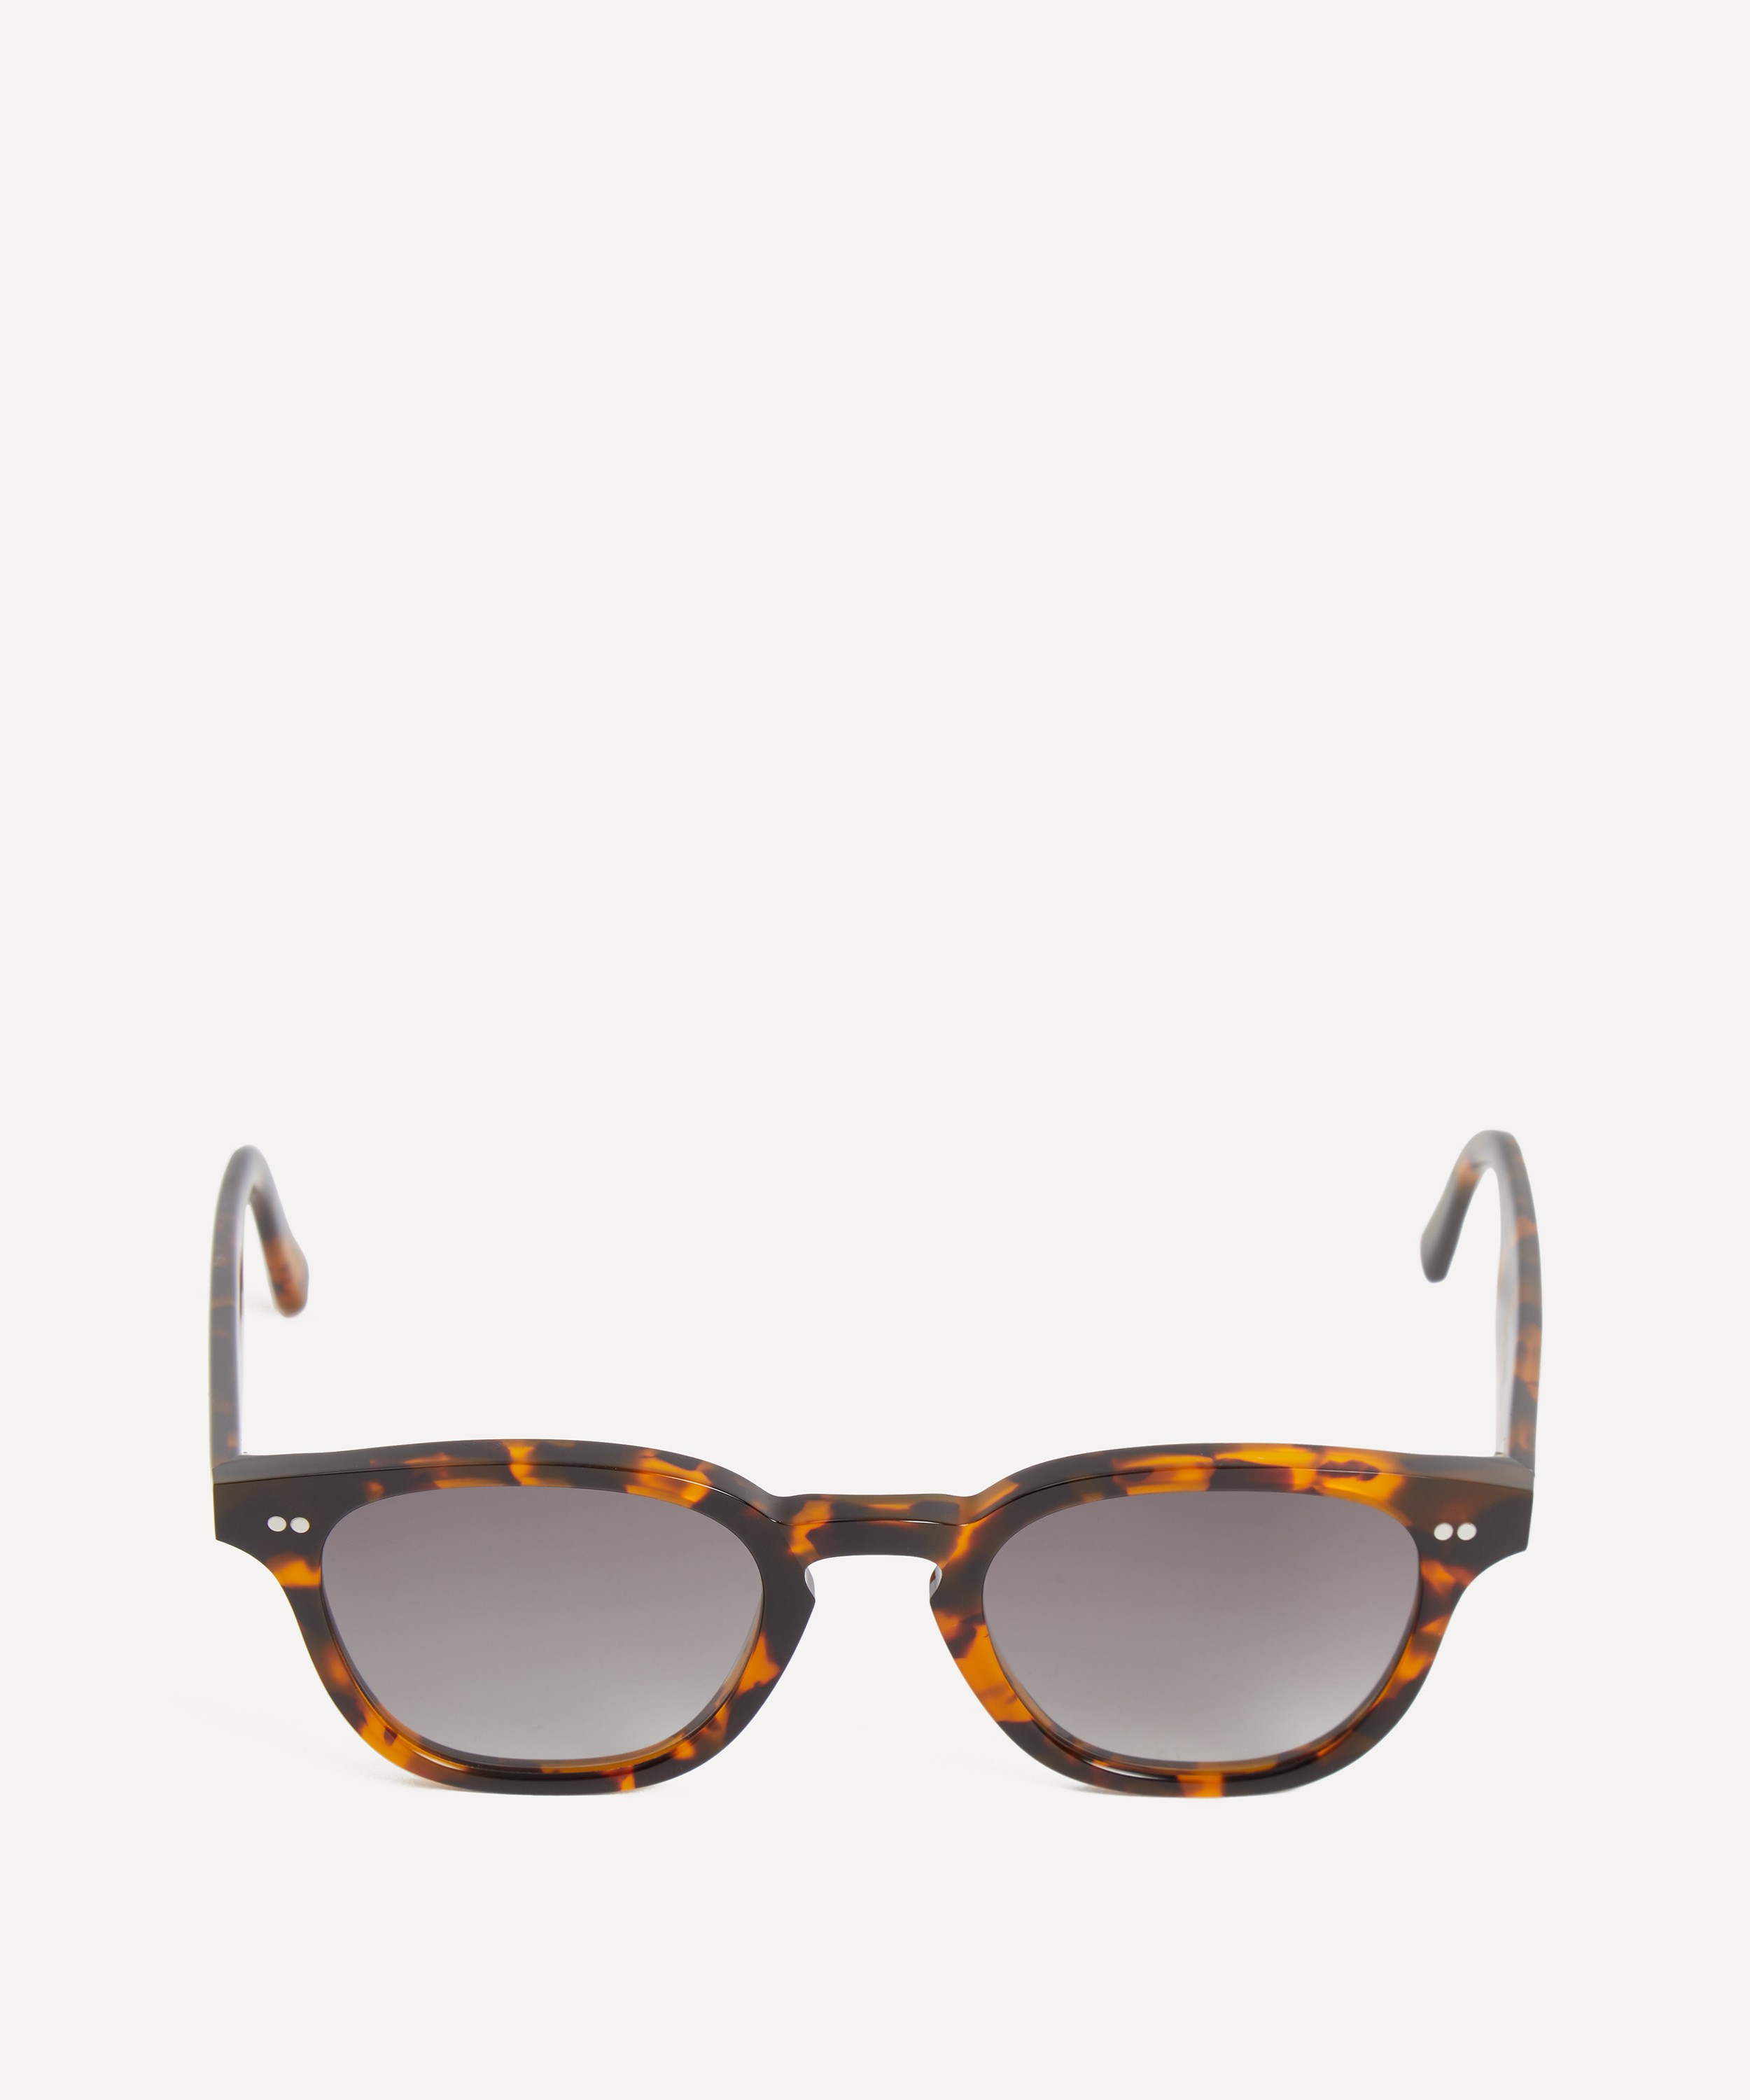 Monokel Eyewear - River Square Sunglasses